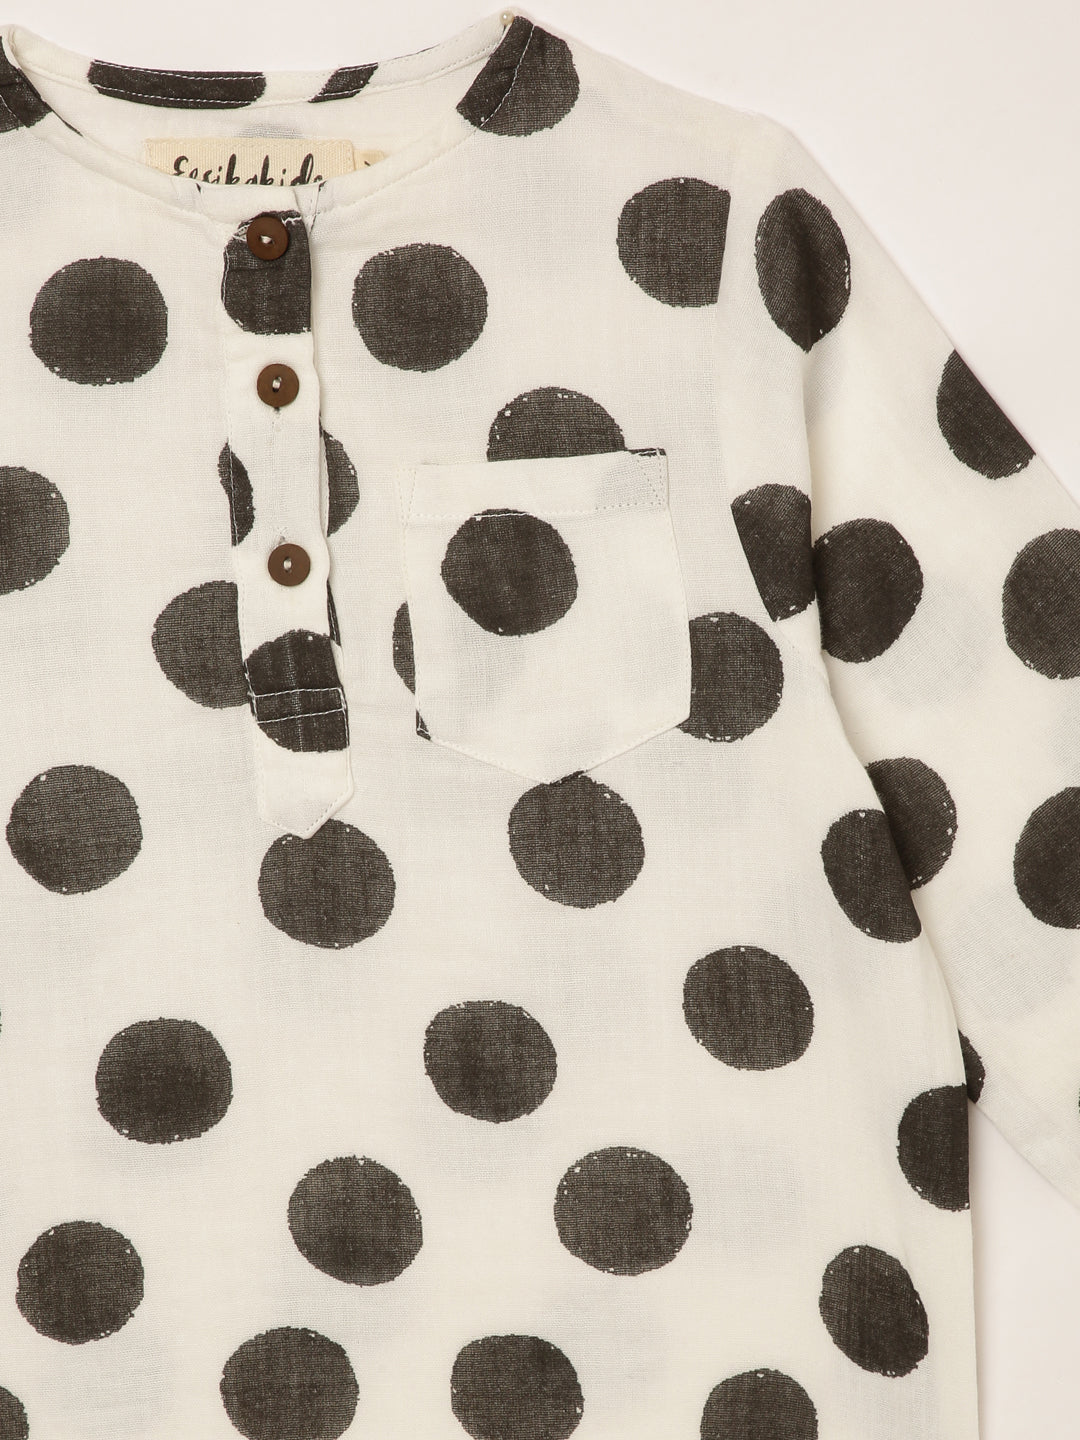 Boys cotton shirt in polka dots 1yr to 8 yrs - Close-up